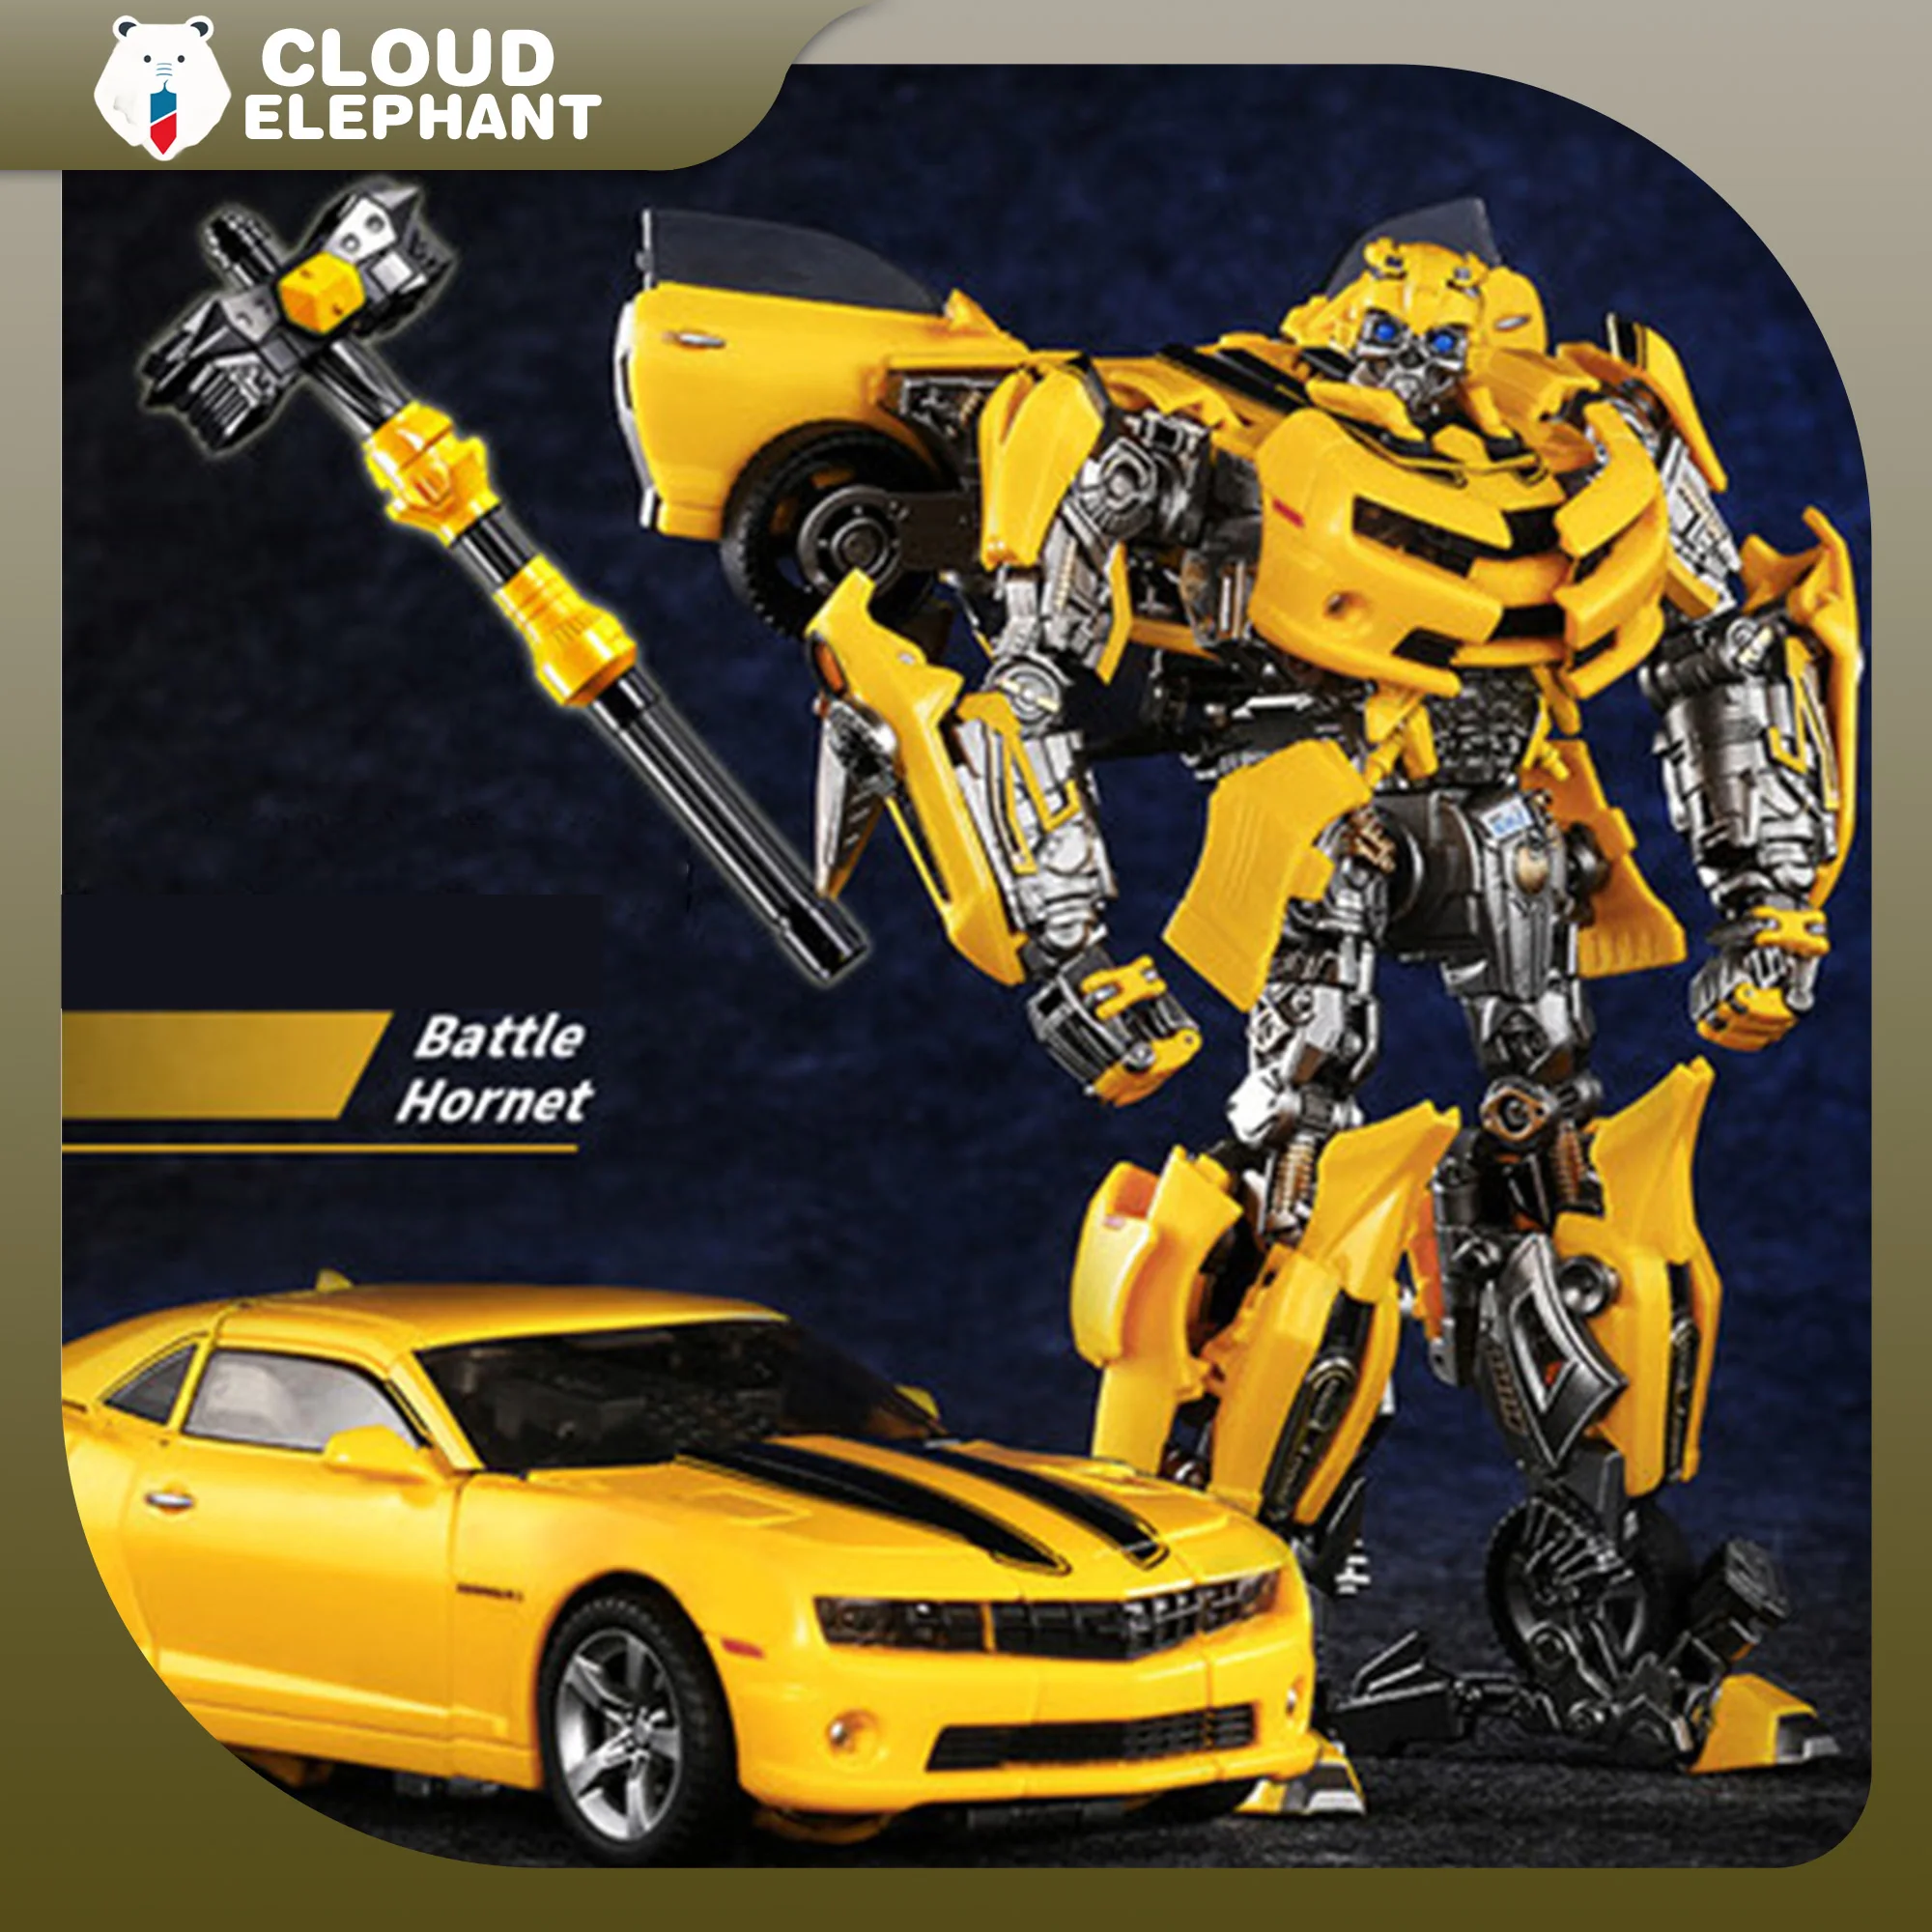 Optimus Prime Figures Transformers Series Bumblebee Figure Prowl Model Action - $58.80 - $92.40